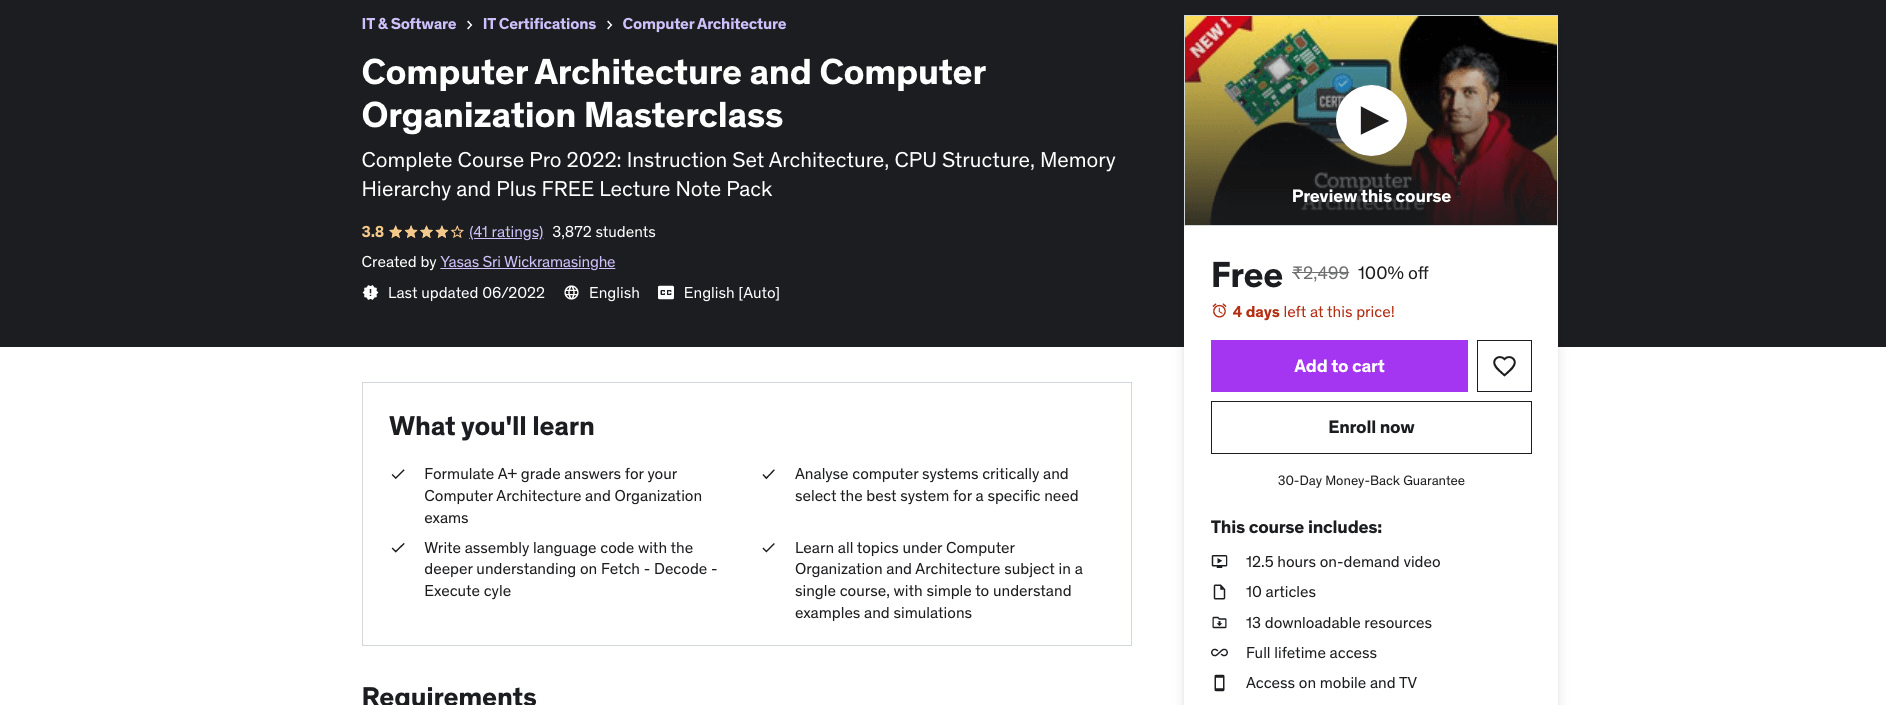 Computer Architecture and Computer Organization Masterclass